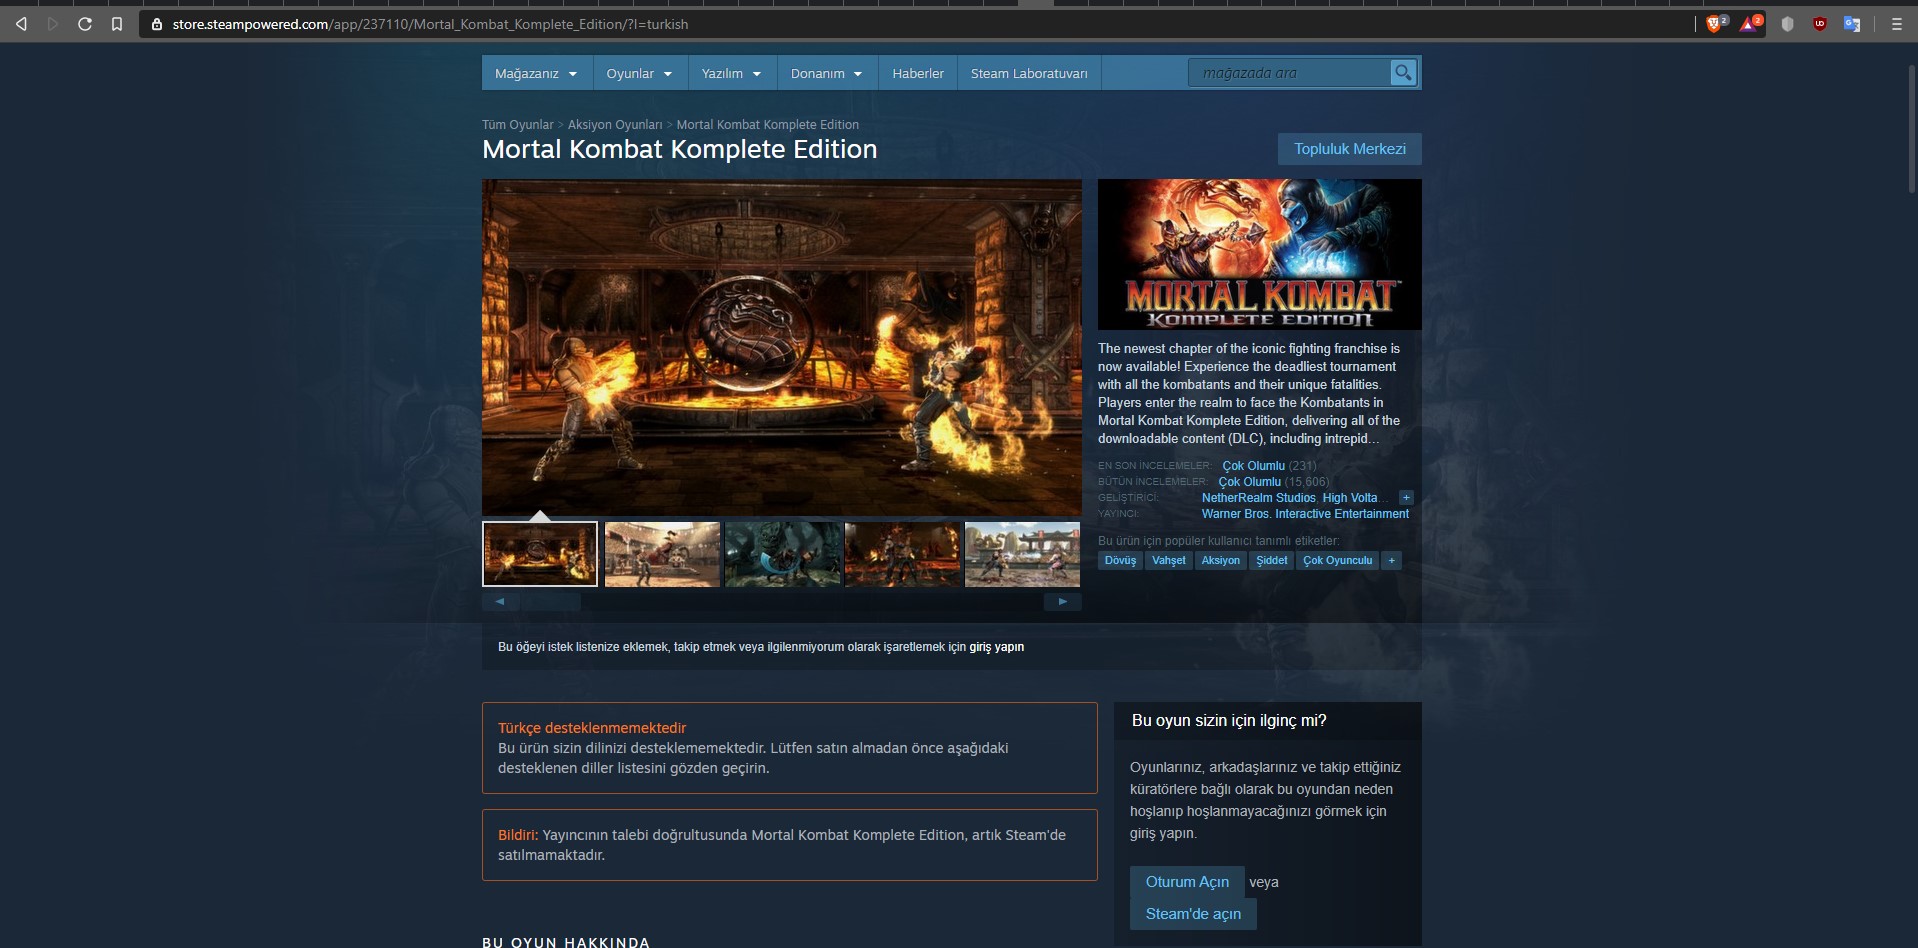 Mortal Kombat Komplete Edition Steam satışı durduruldu